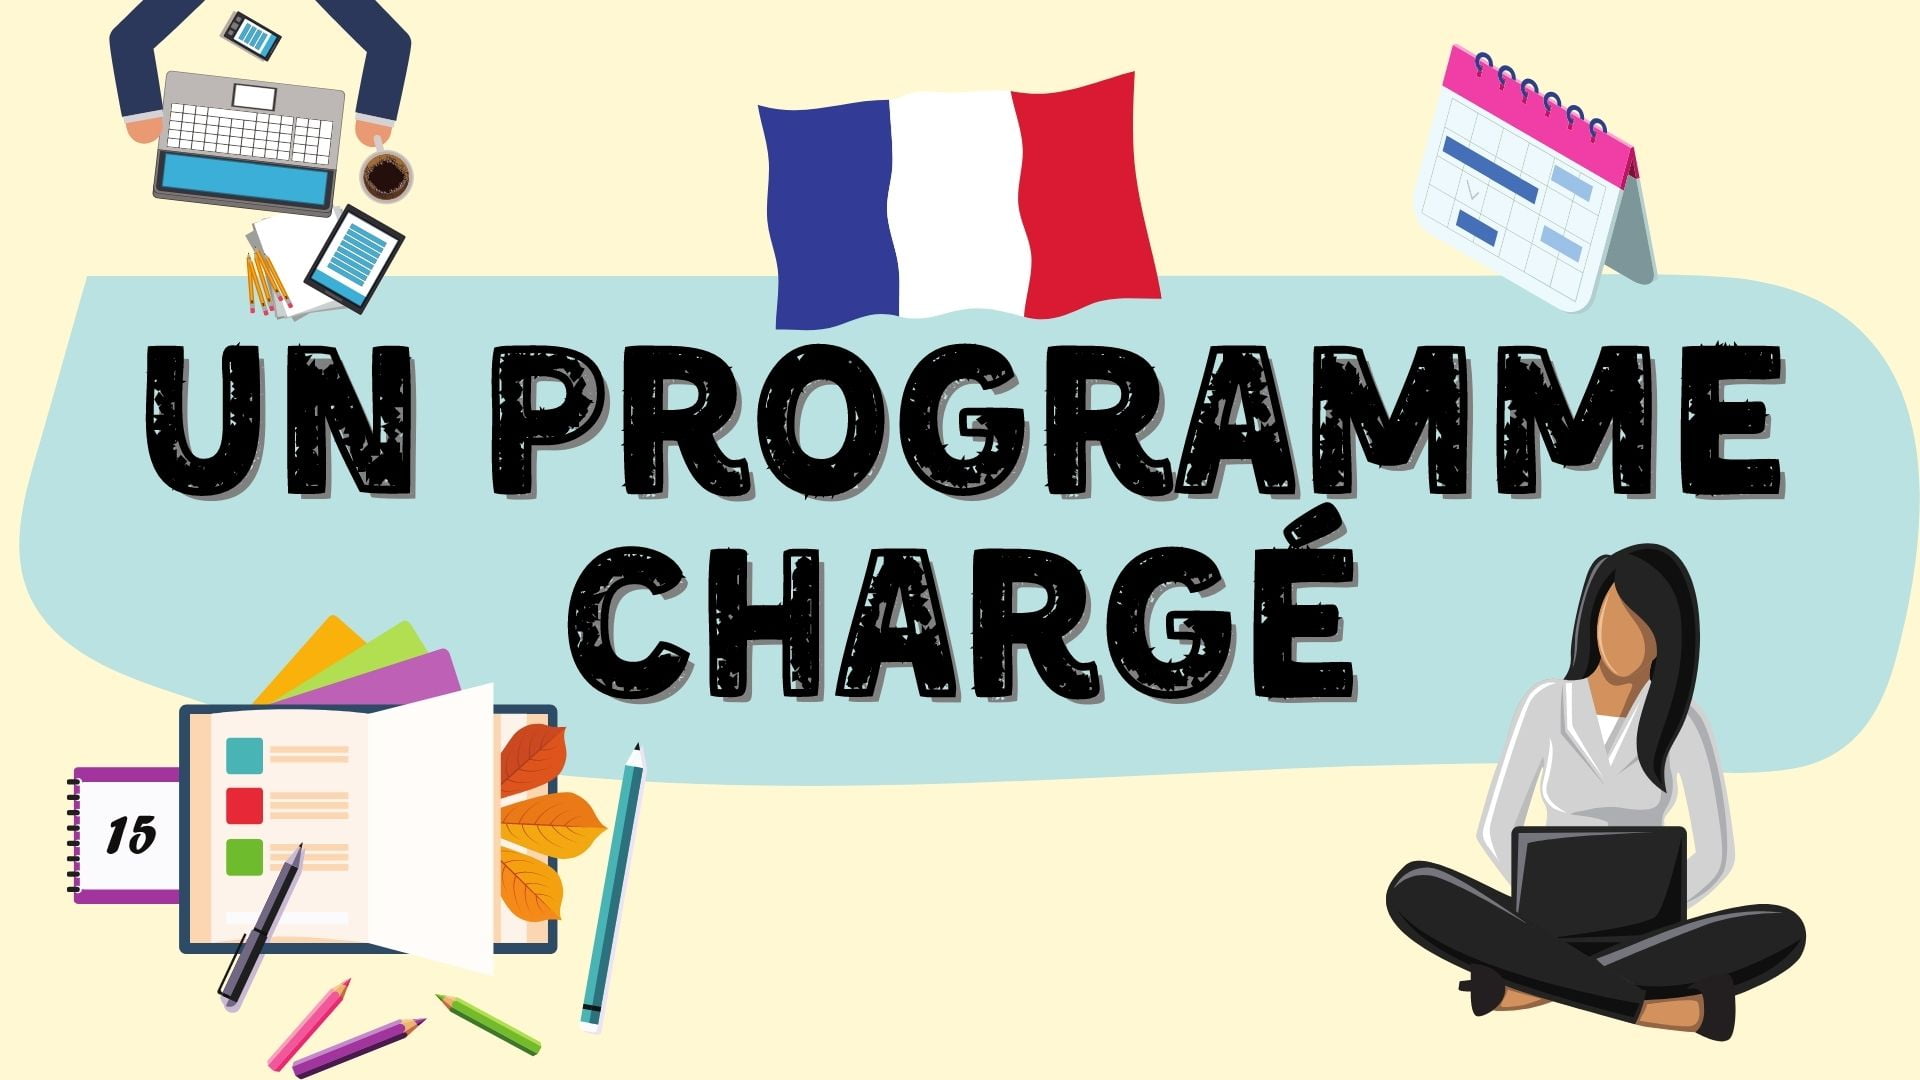 Un programme chargé - French text reading